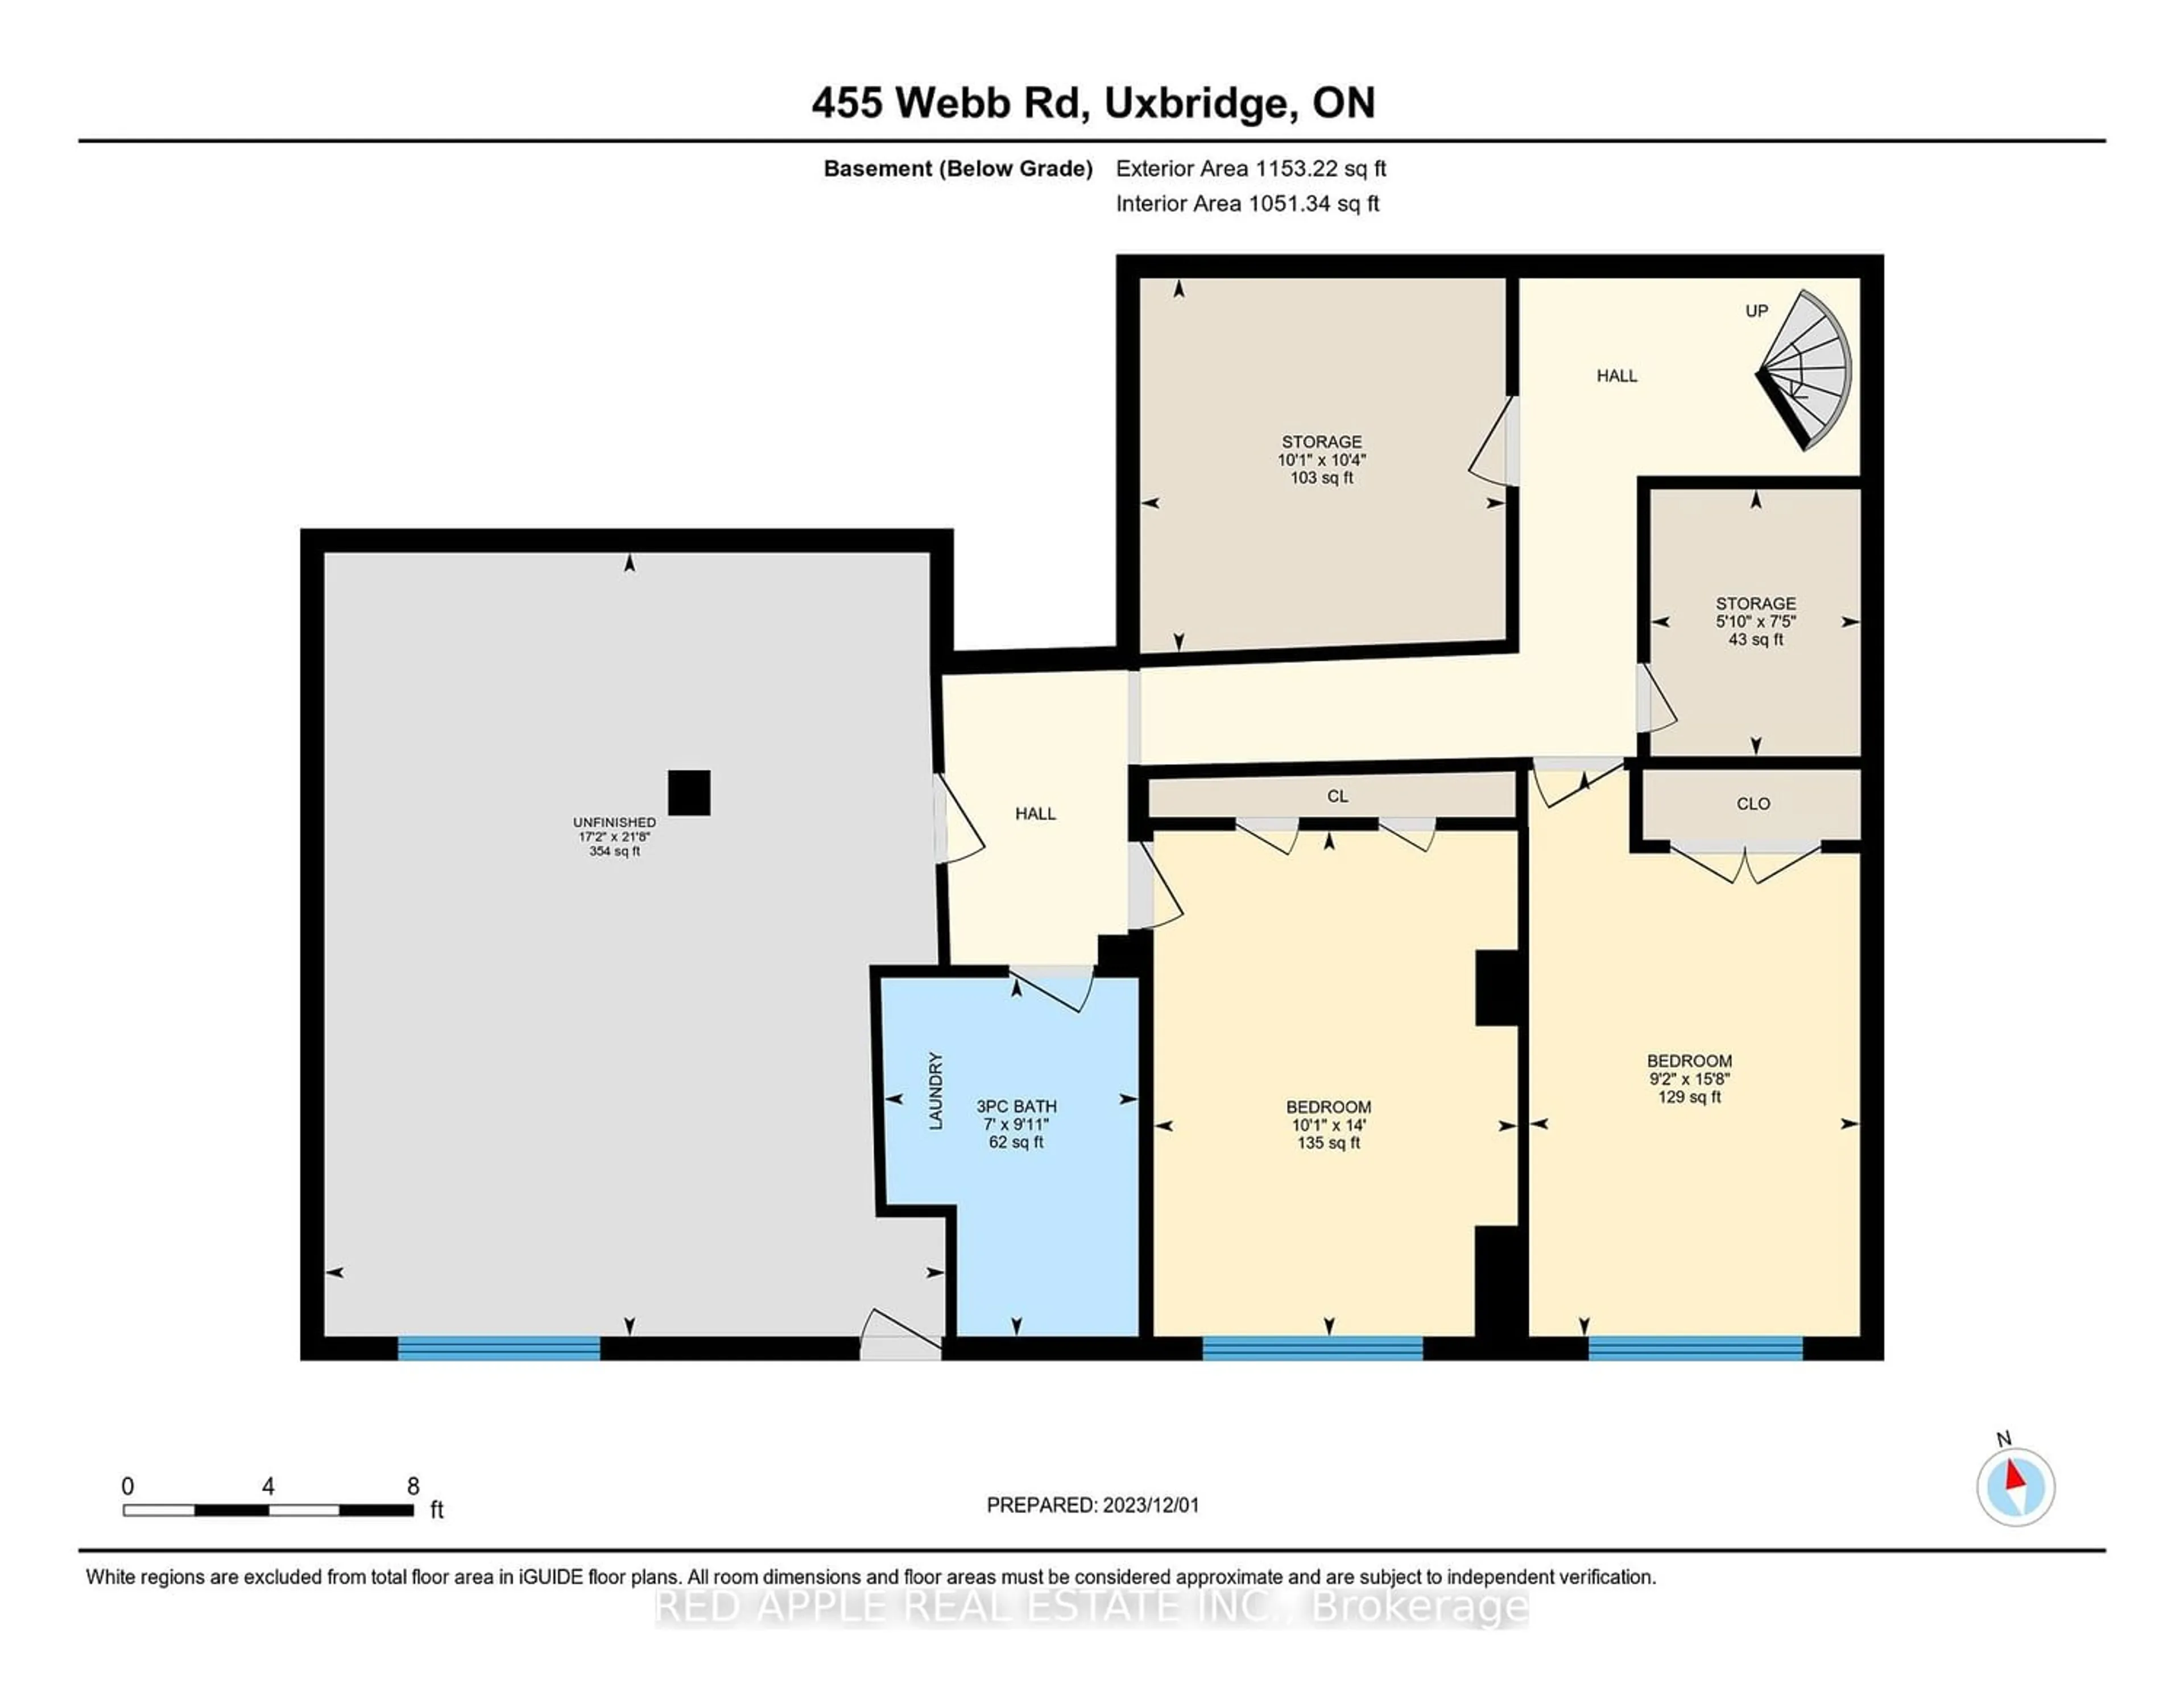 Floor plan for 455 Webb Rd, Uxbridge Ontario L9P 1R4